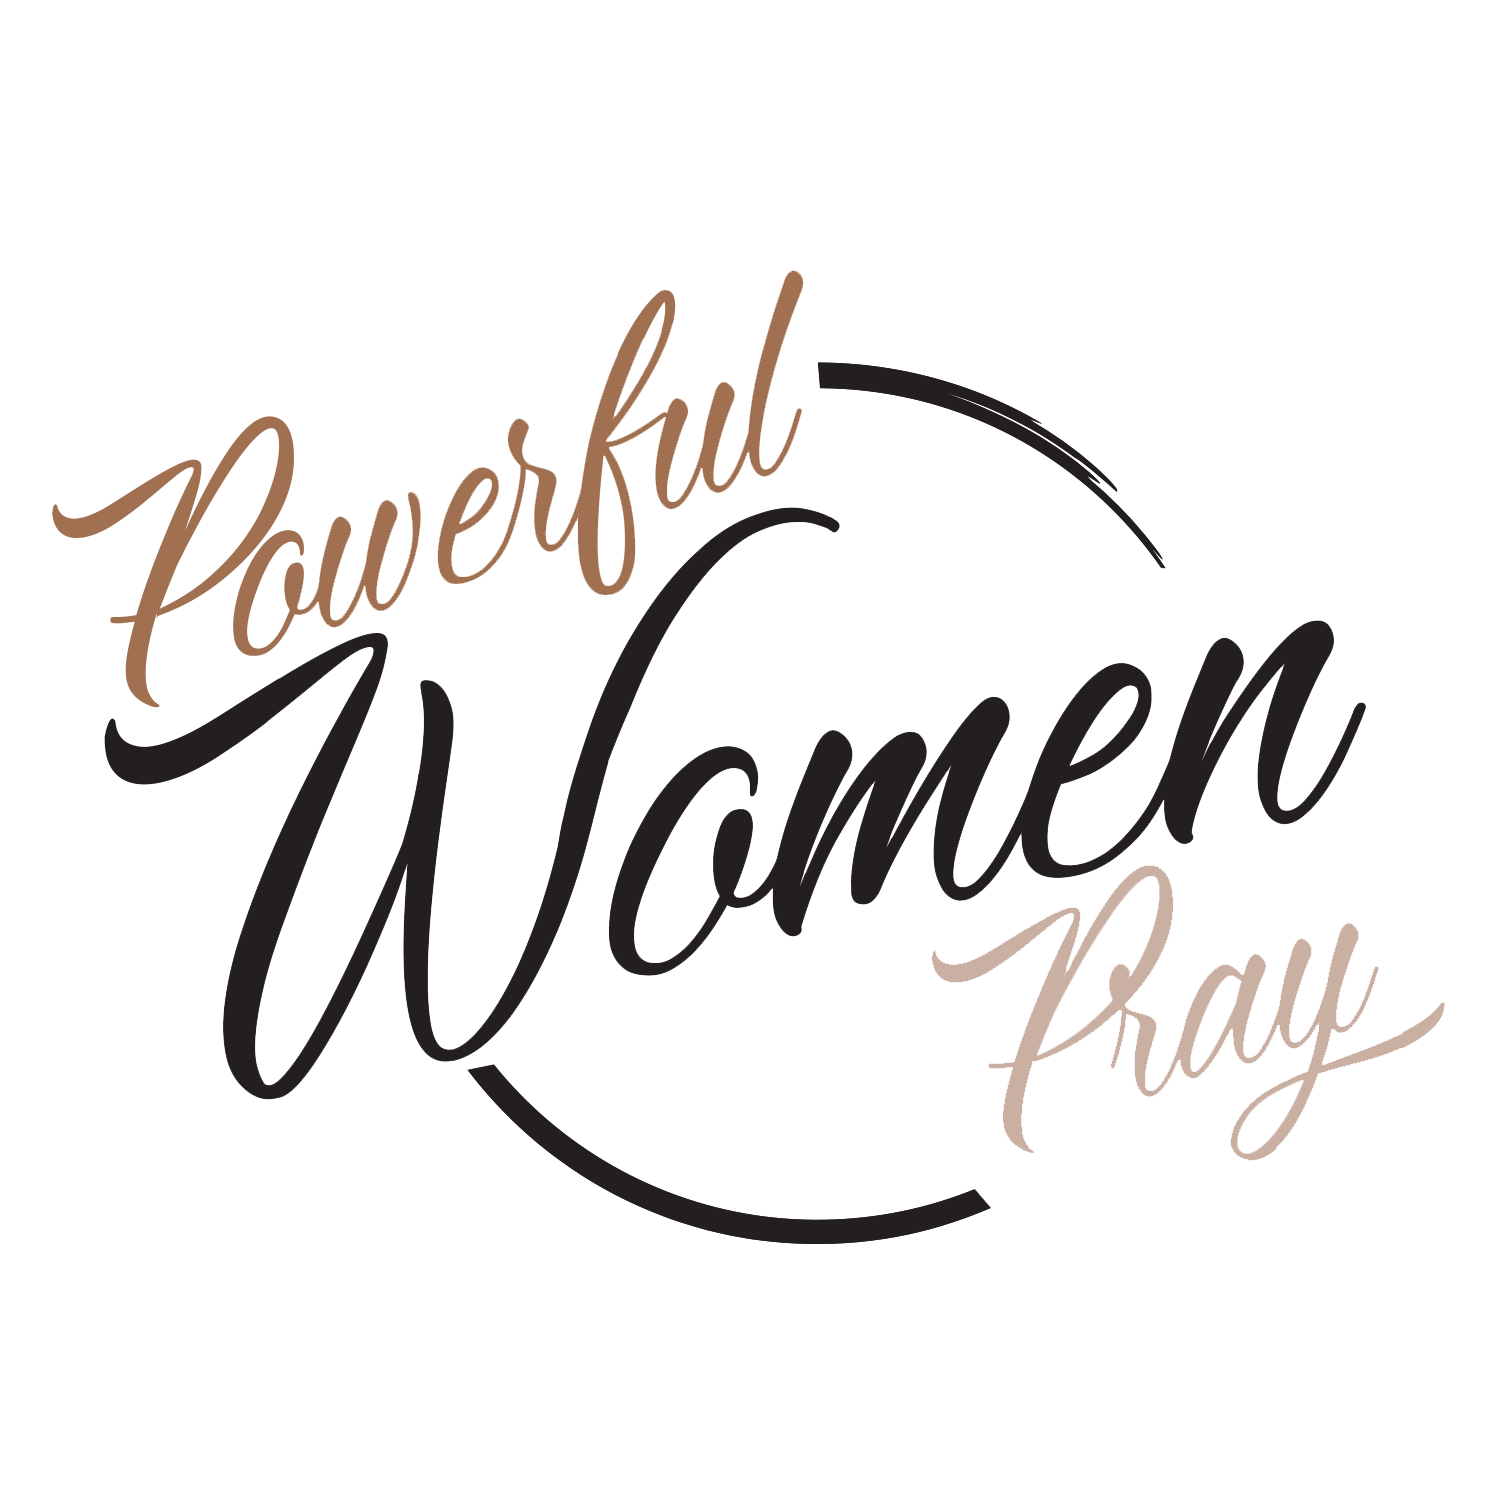 Powerful Women Pray e-Gift Card